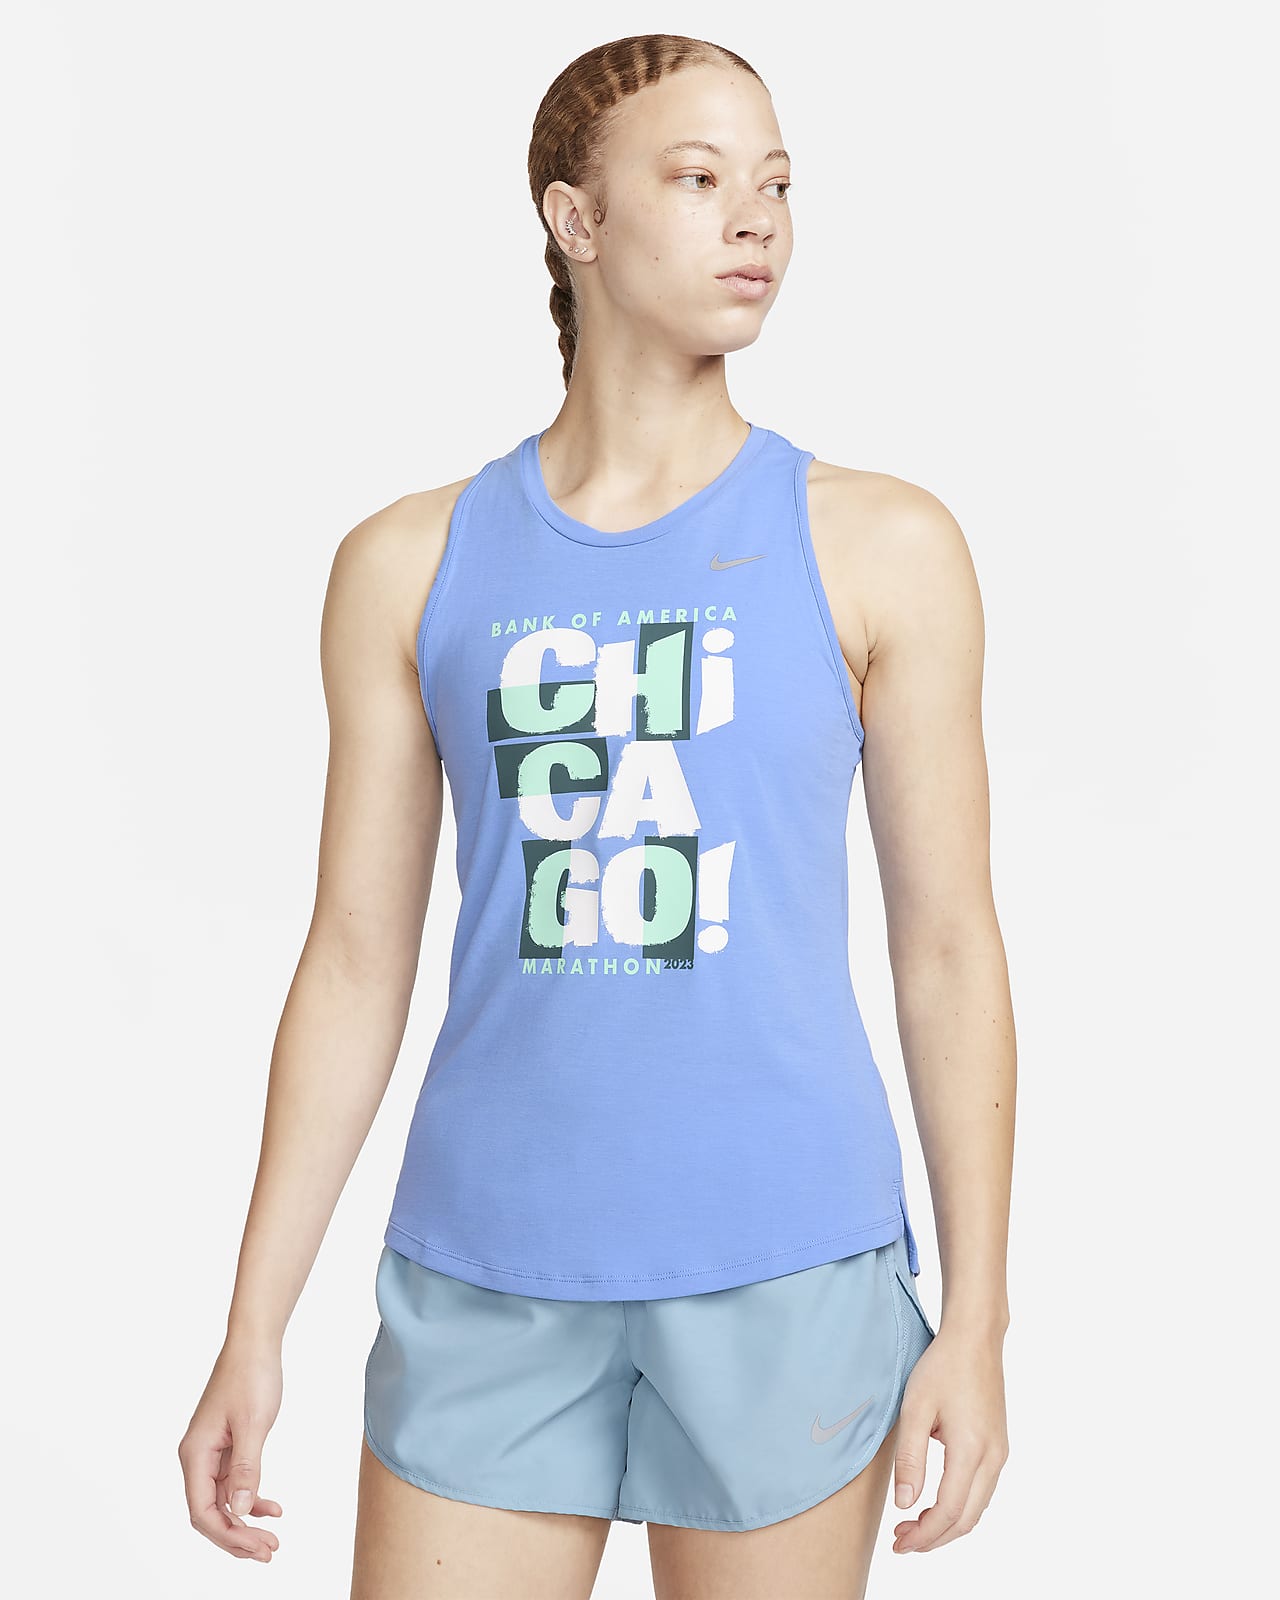 Nike Dri-FIT One Luxe Women's Tank Top